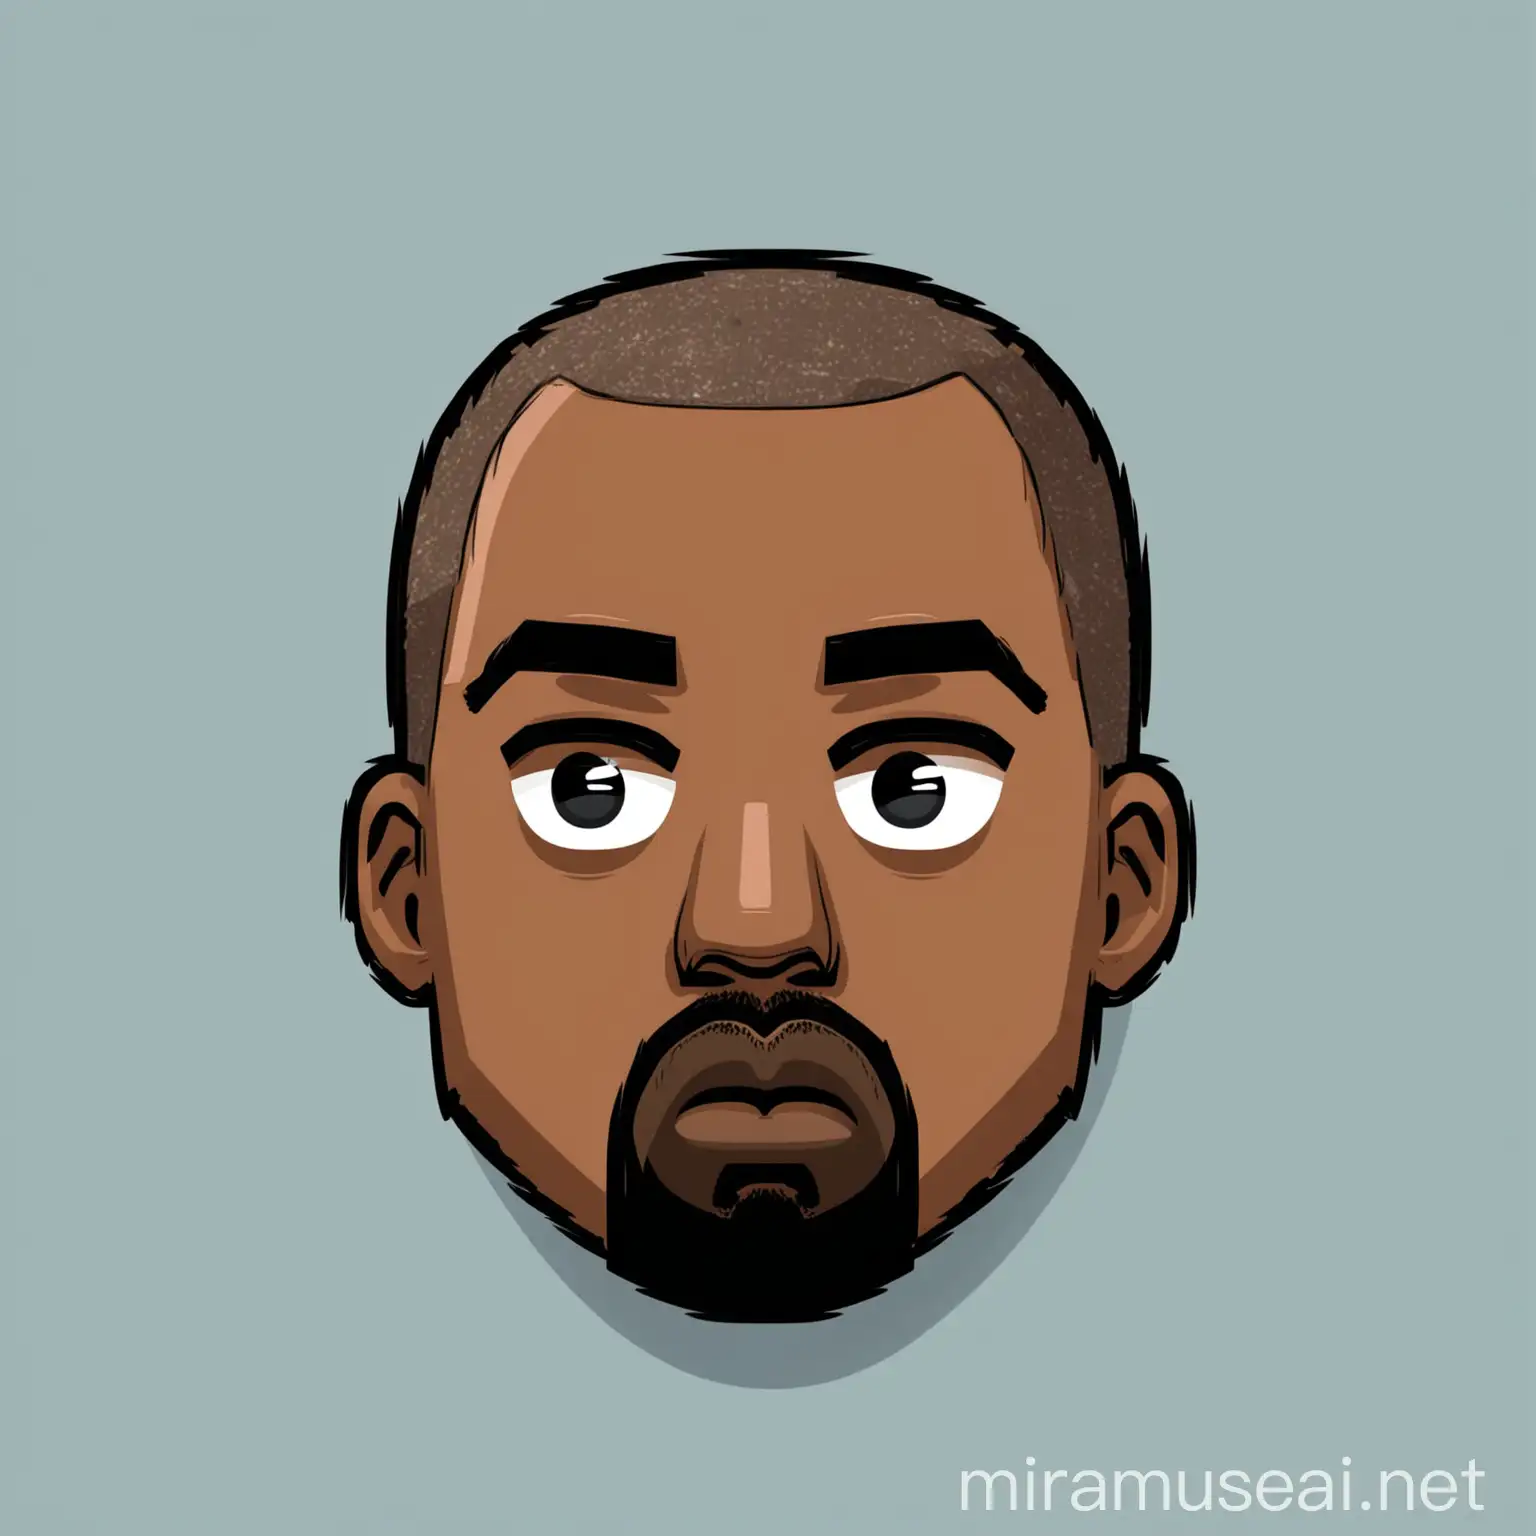 Cartoon Kanye West Head Icon Vibrant Illustration of the HipHop Artist